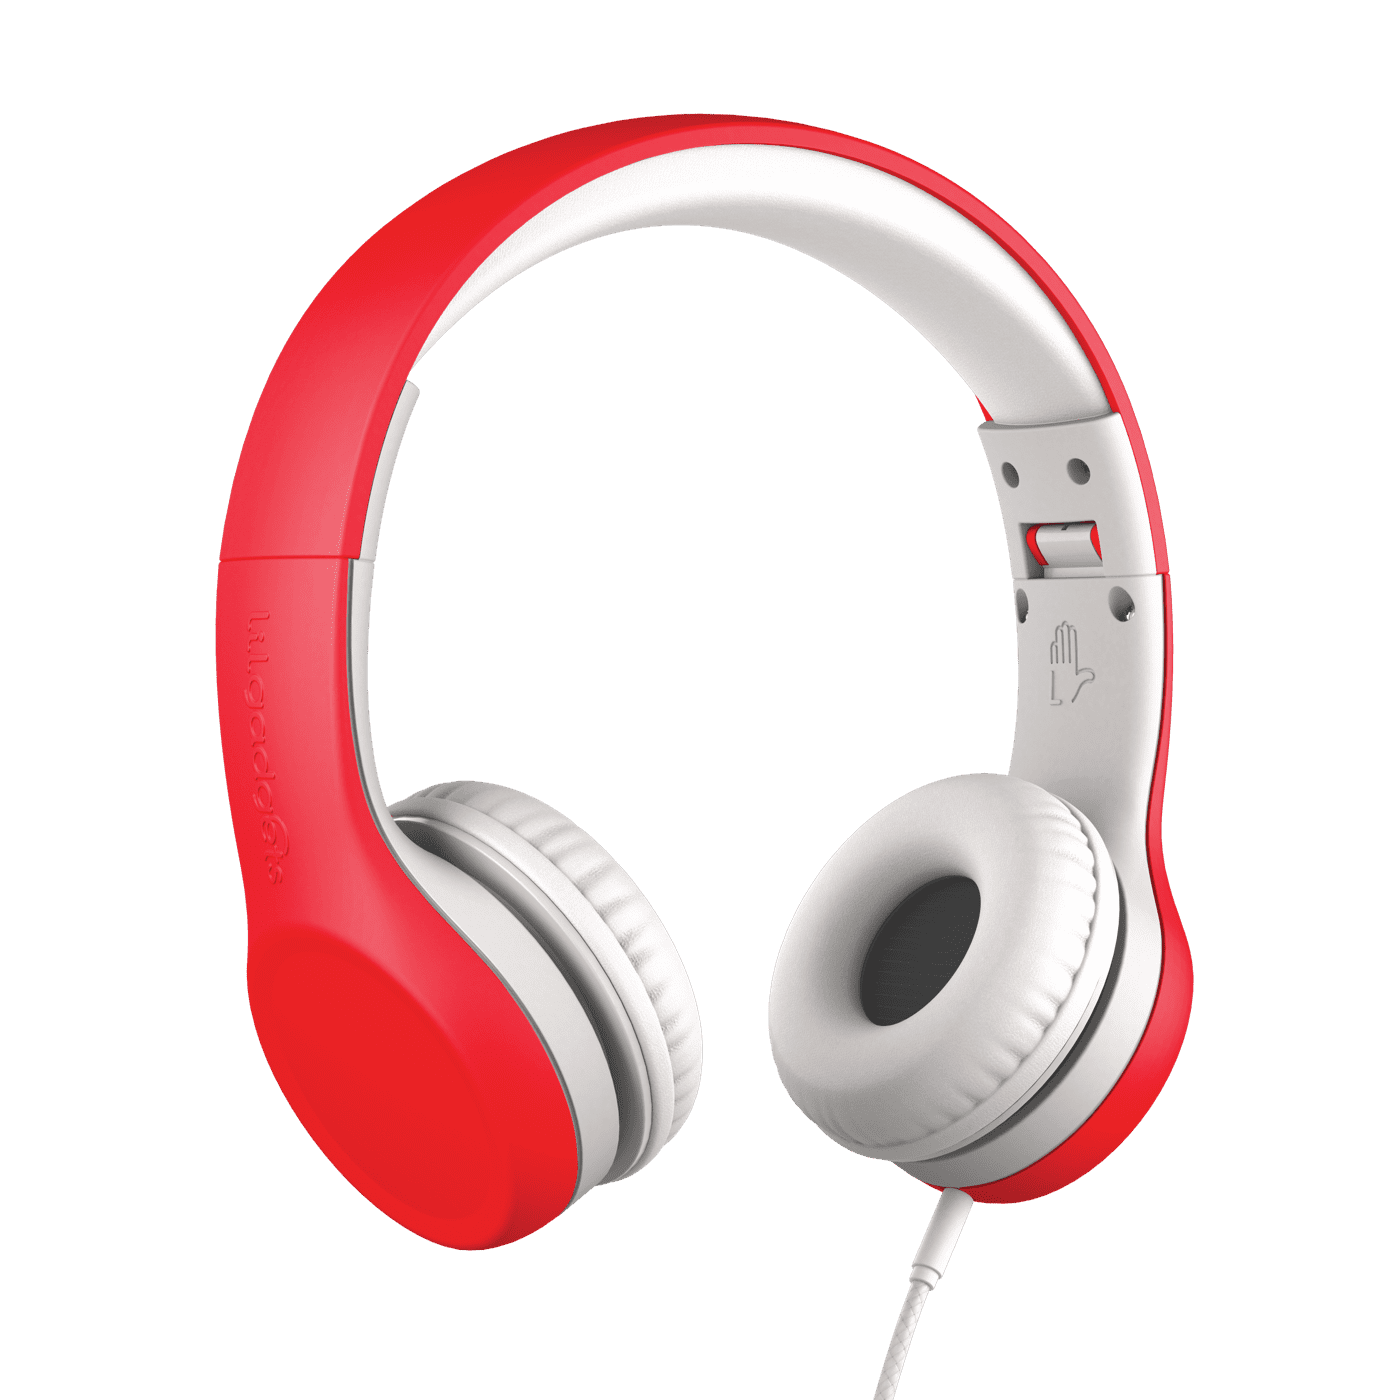 Flex-Phones Indestructible Foam Headphones, Black - Walmart.com